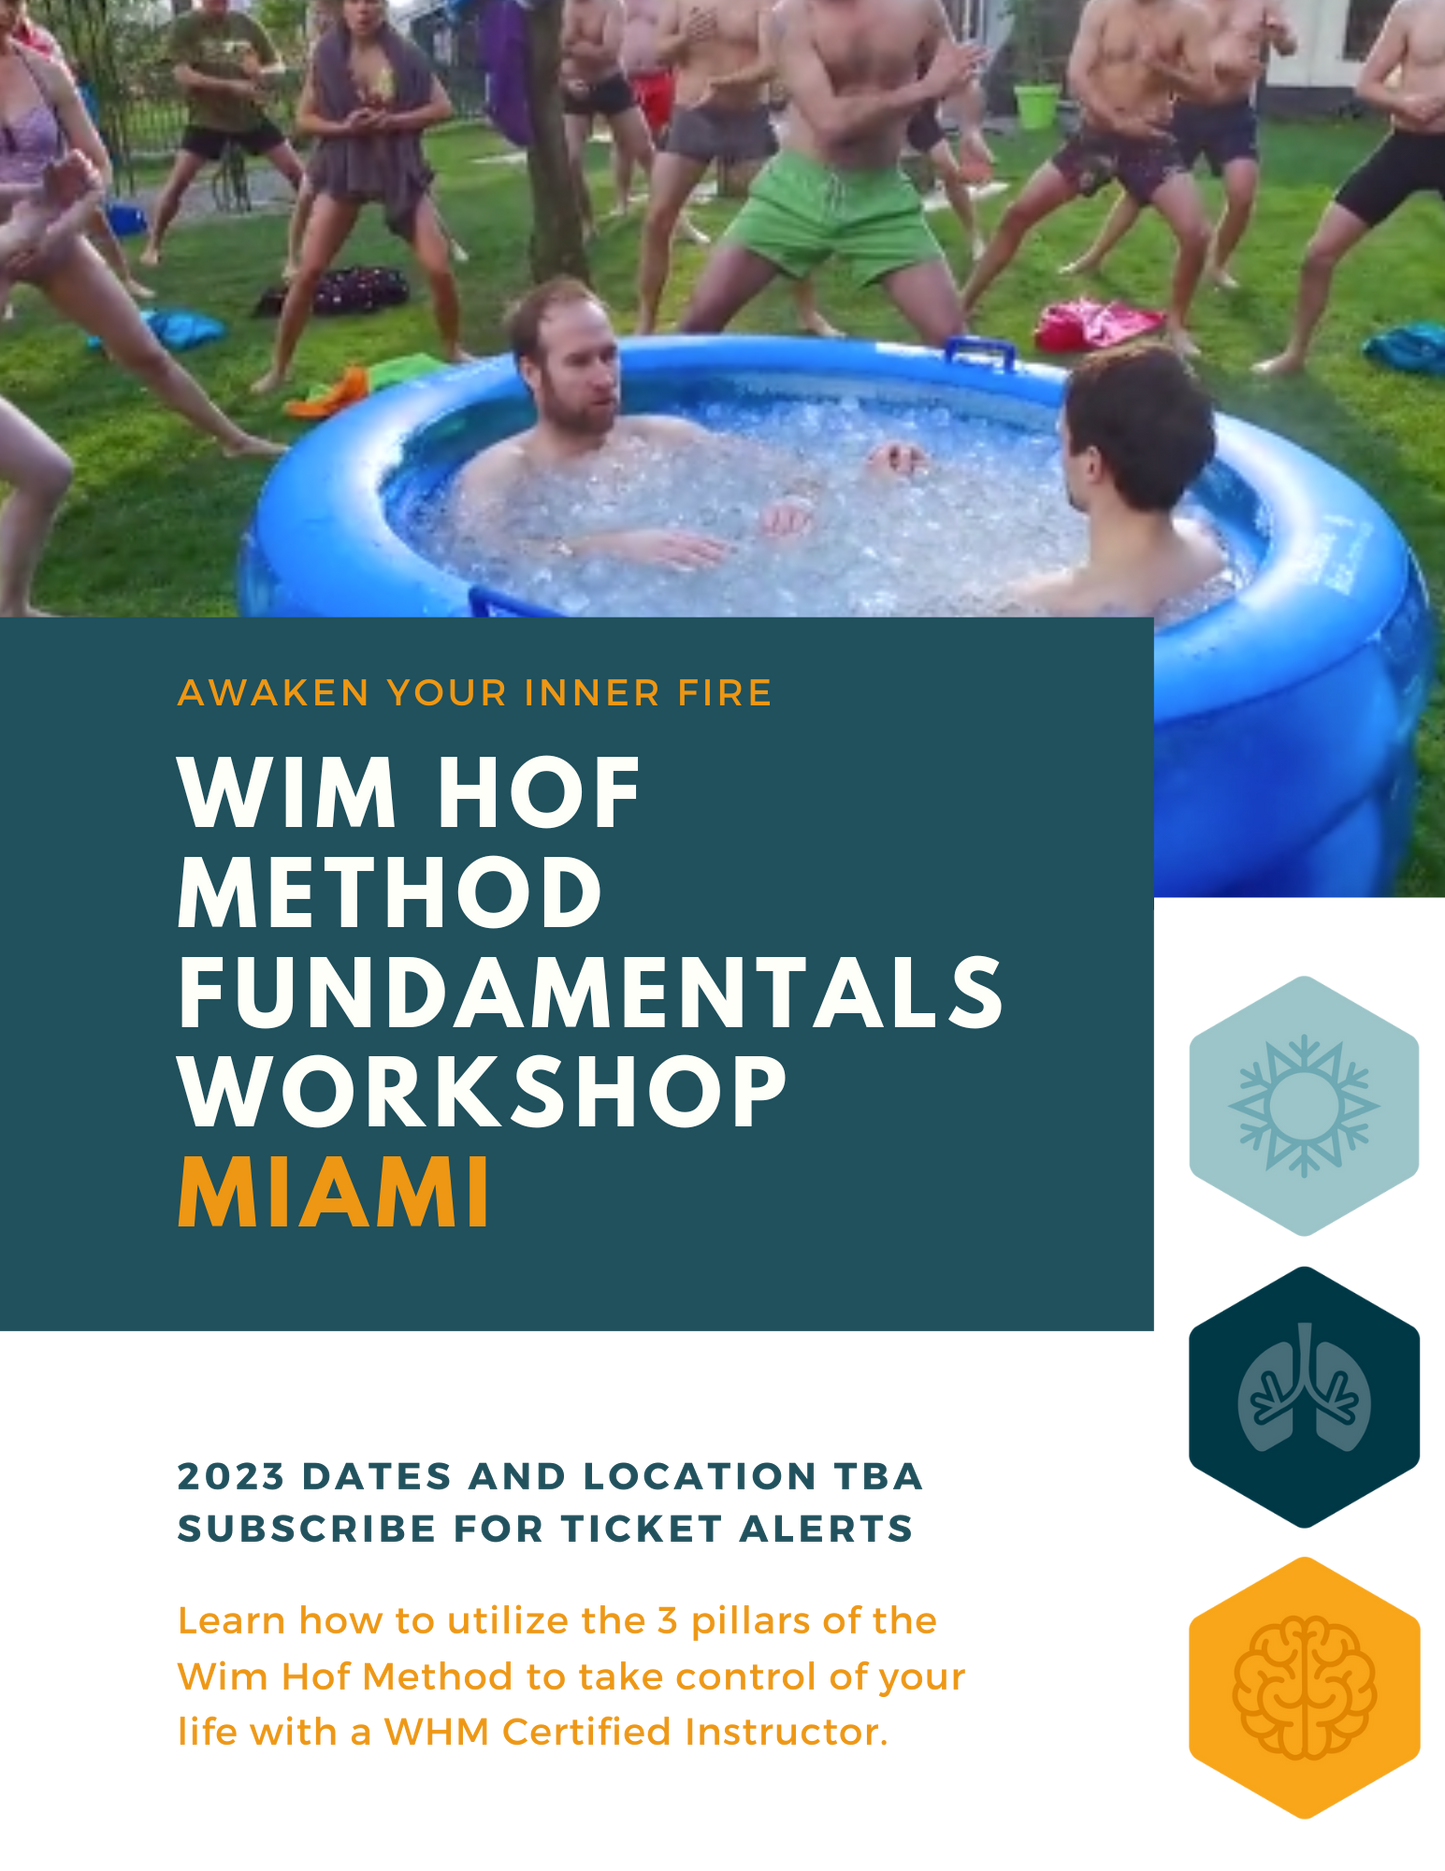 Miami Wim Hof Method Fundamentals Workshop